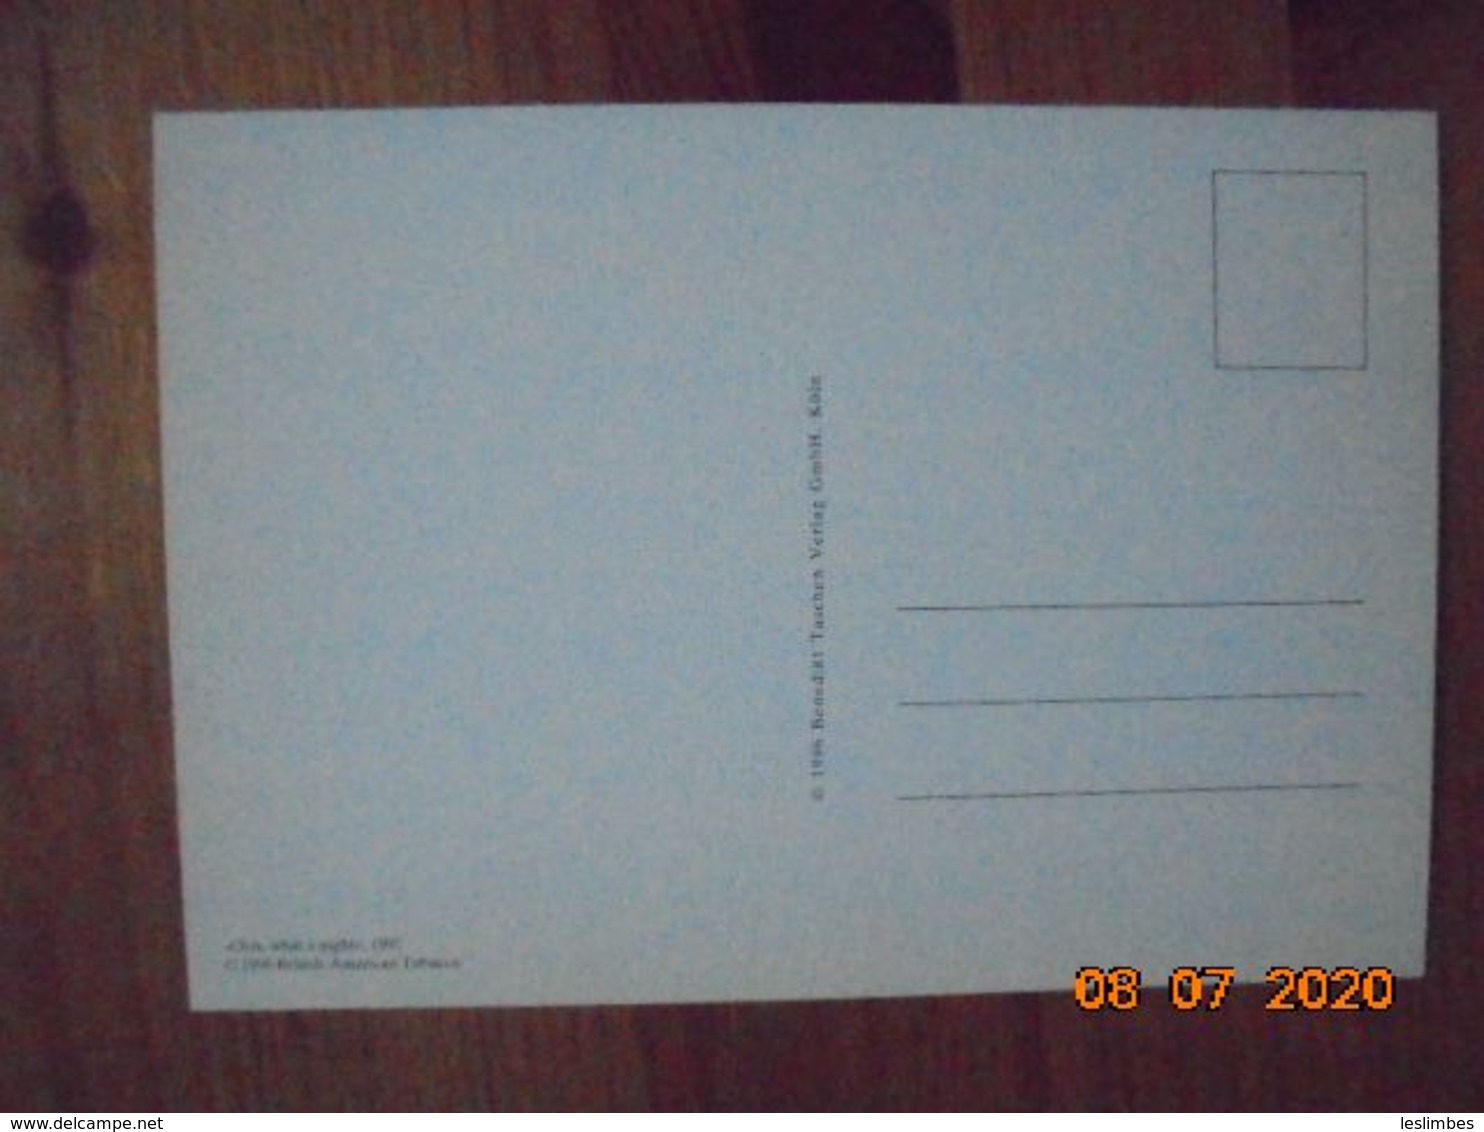 Carte Postale Publicitaire Allemand (Taschen 1996) 16,3 X 11,4 Cm. Lucky Strike. Sonst Nichts. "Ooh, What A Night" 1991 - Objets Publicitaires